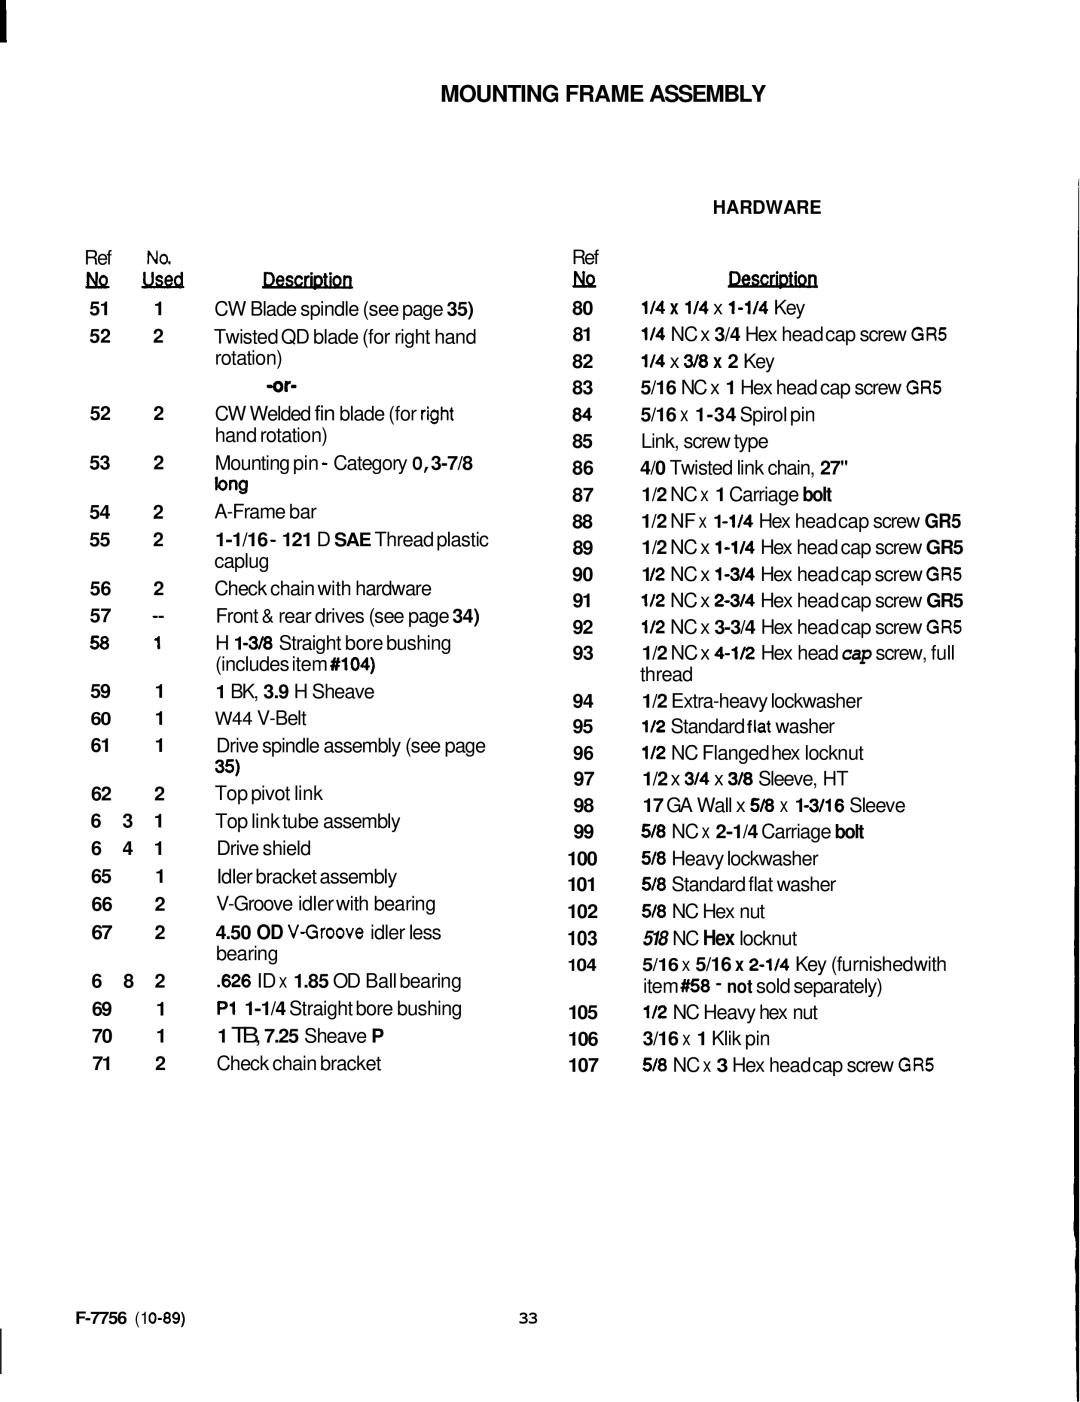 Honda Power Equipment RM752A manual J l h I l S e c a, NQ DescriDtion, Mounting Frame Assembly 